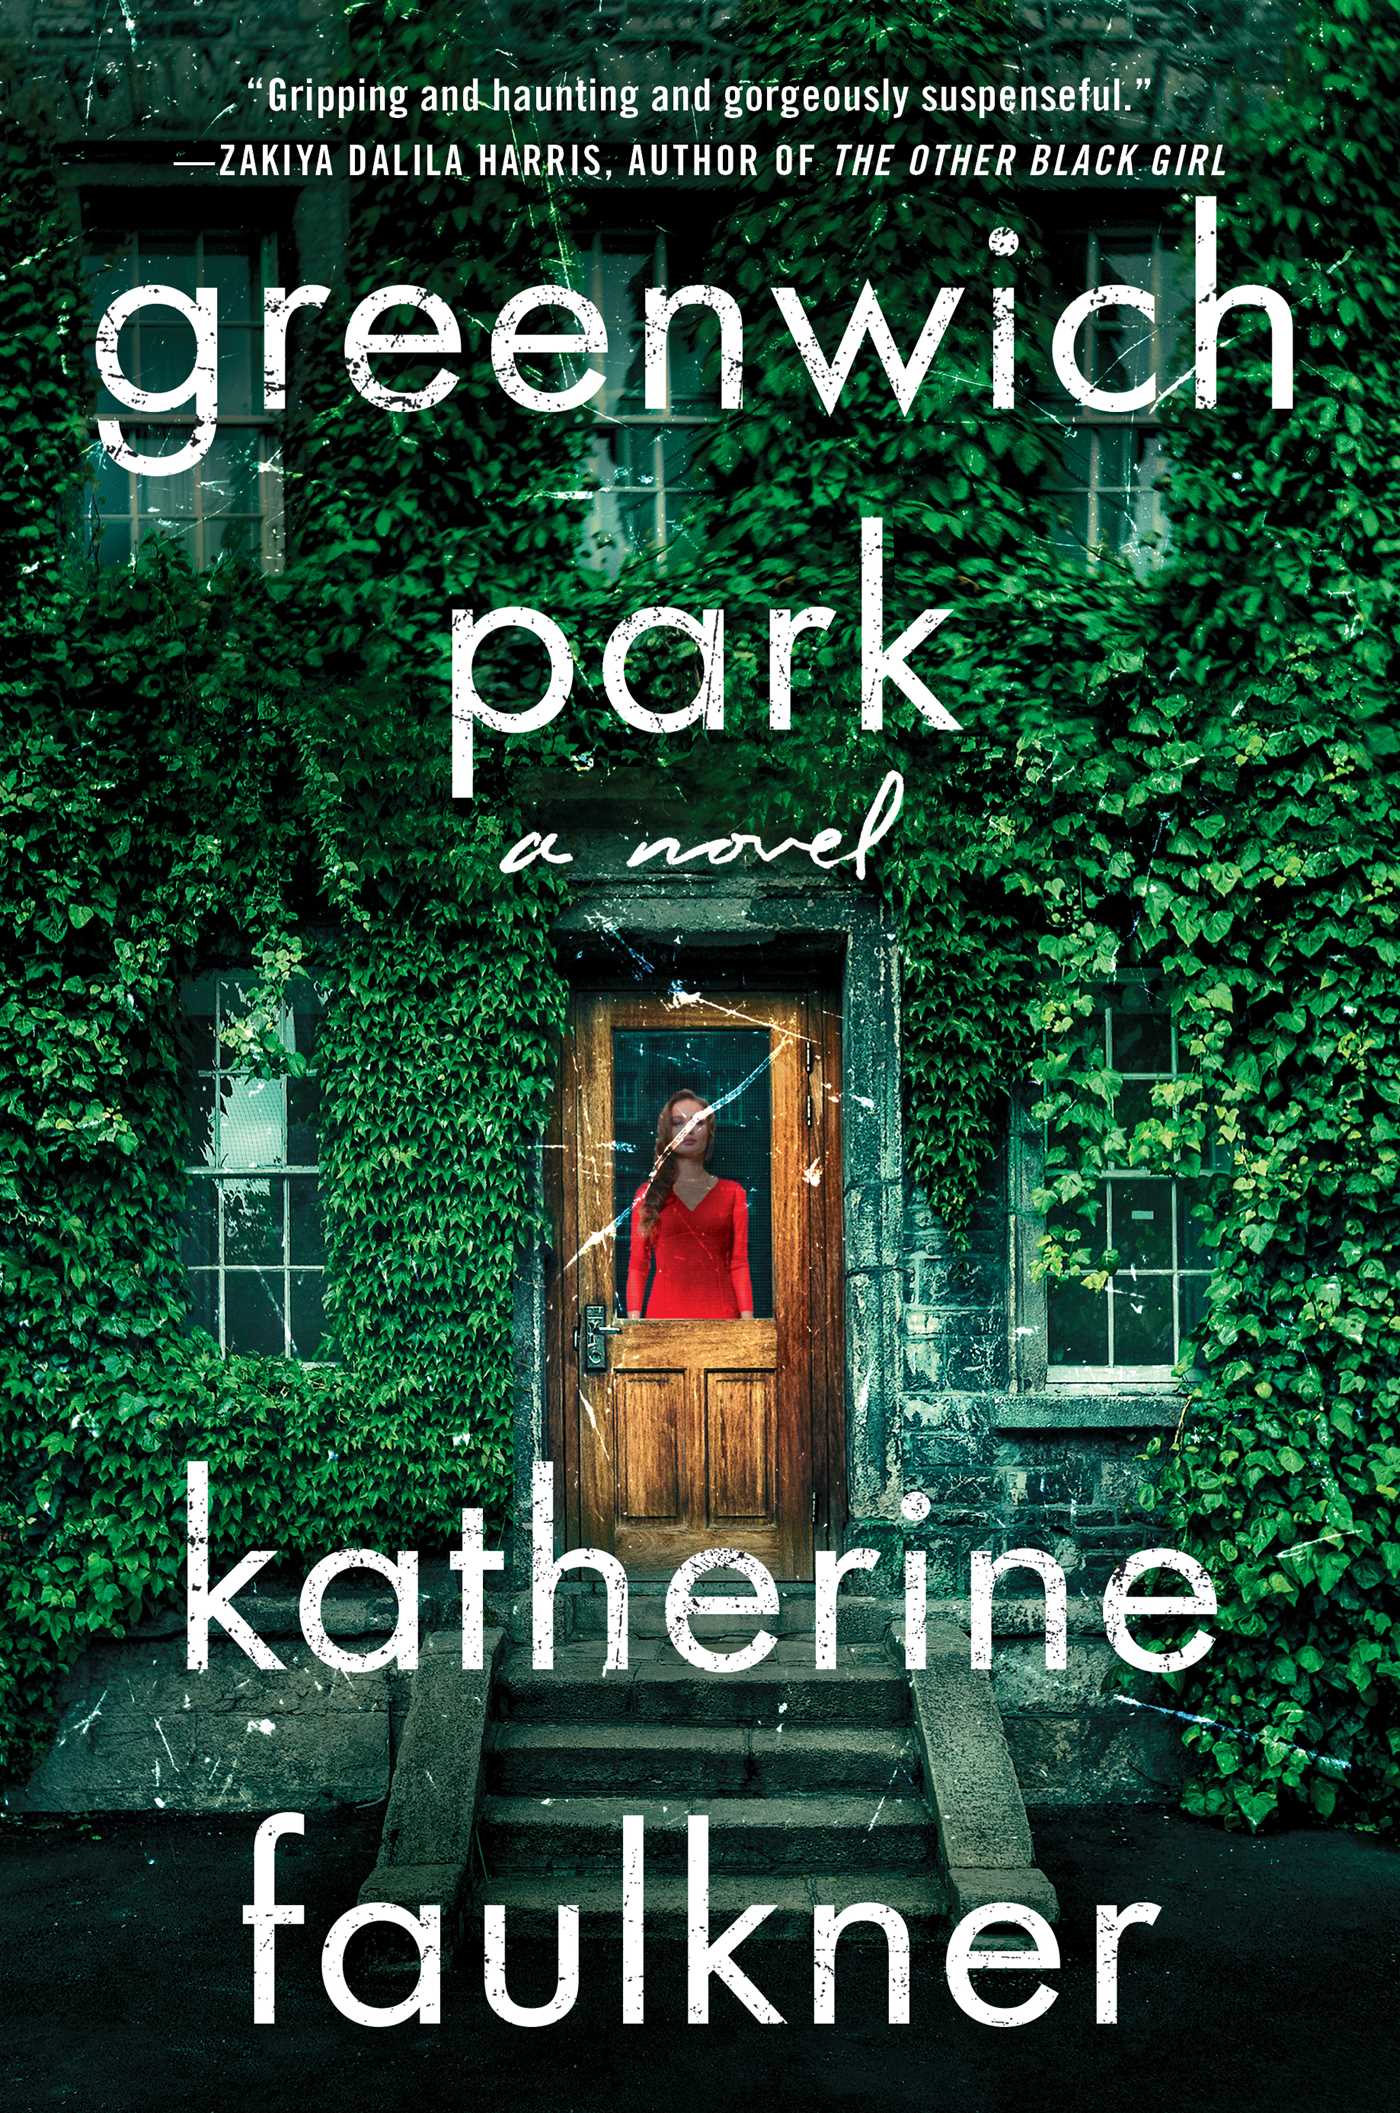 Greenwich Park by Katherine Faulkner Free ePub Download